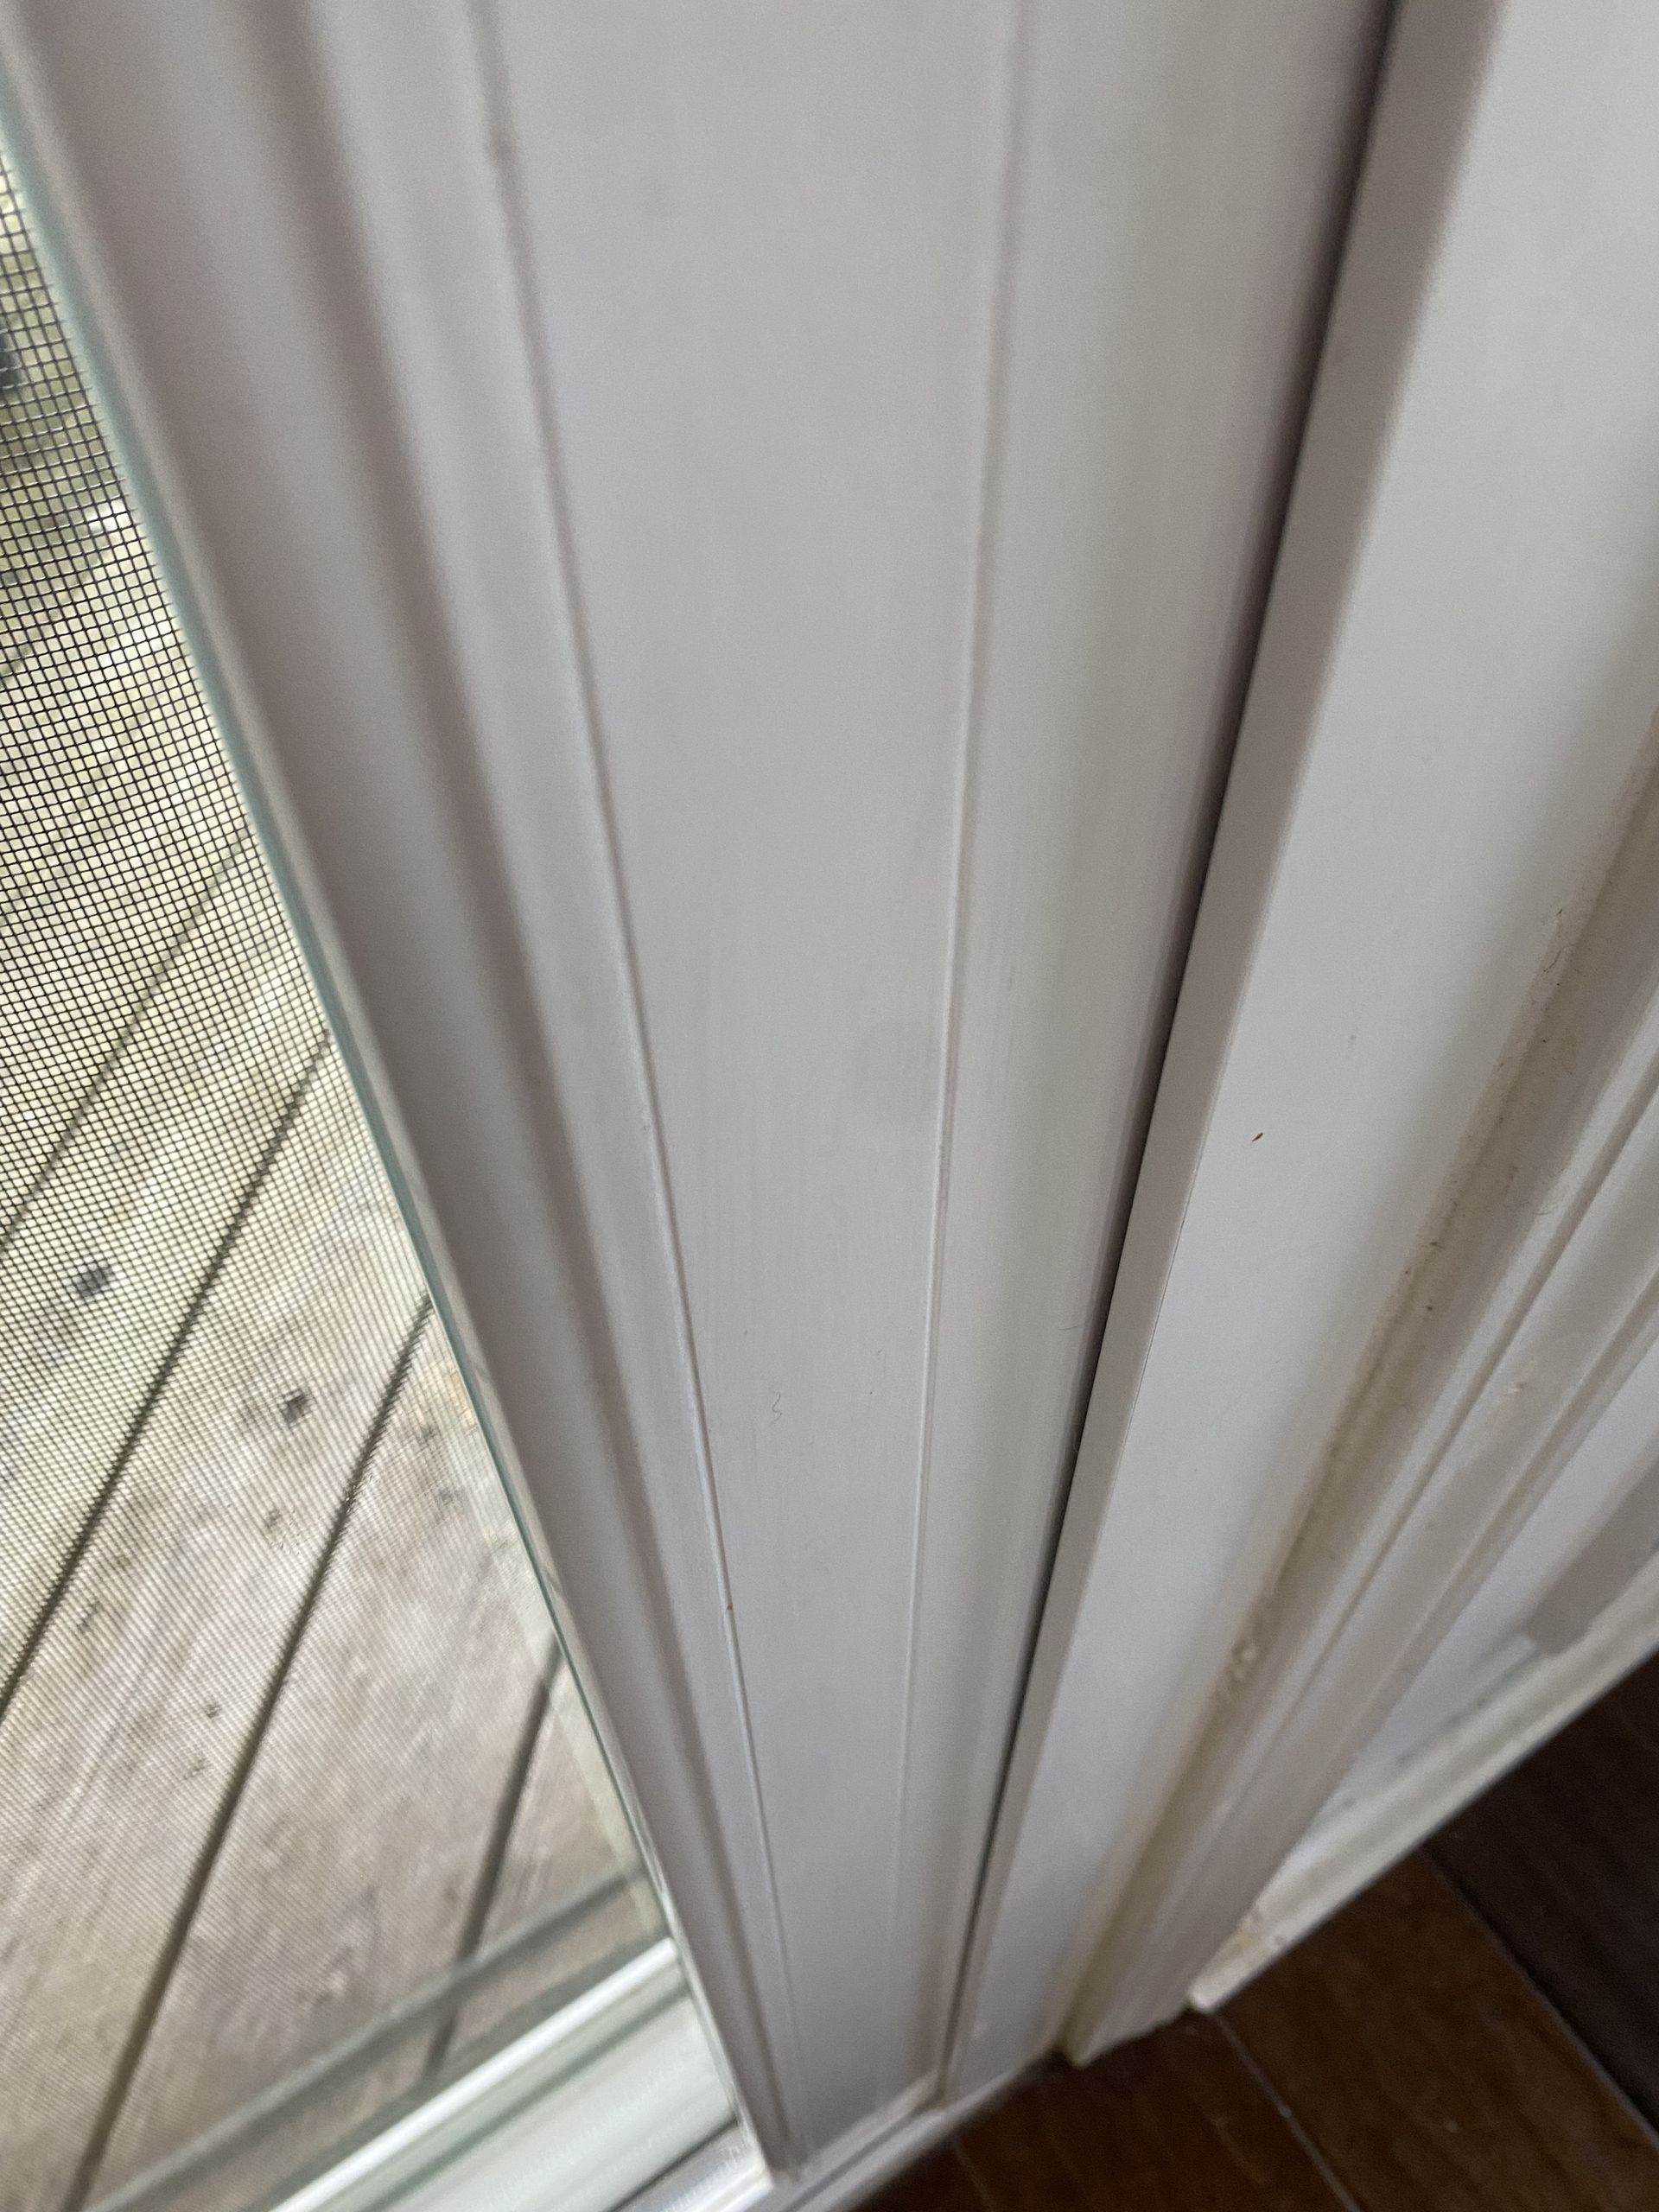 a close up of a sliding glass door with a white trim .